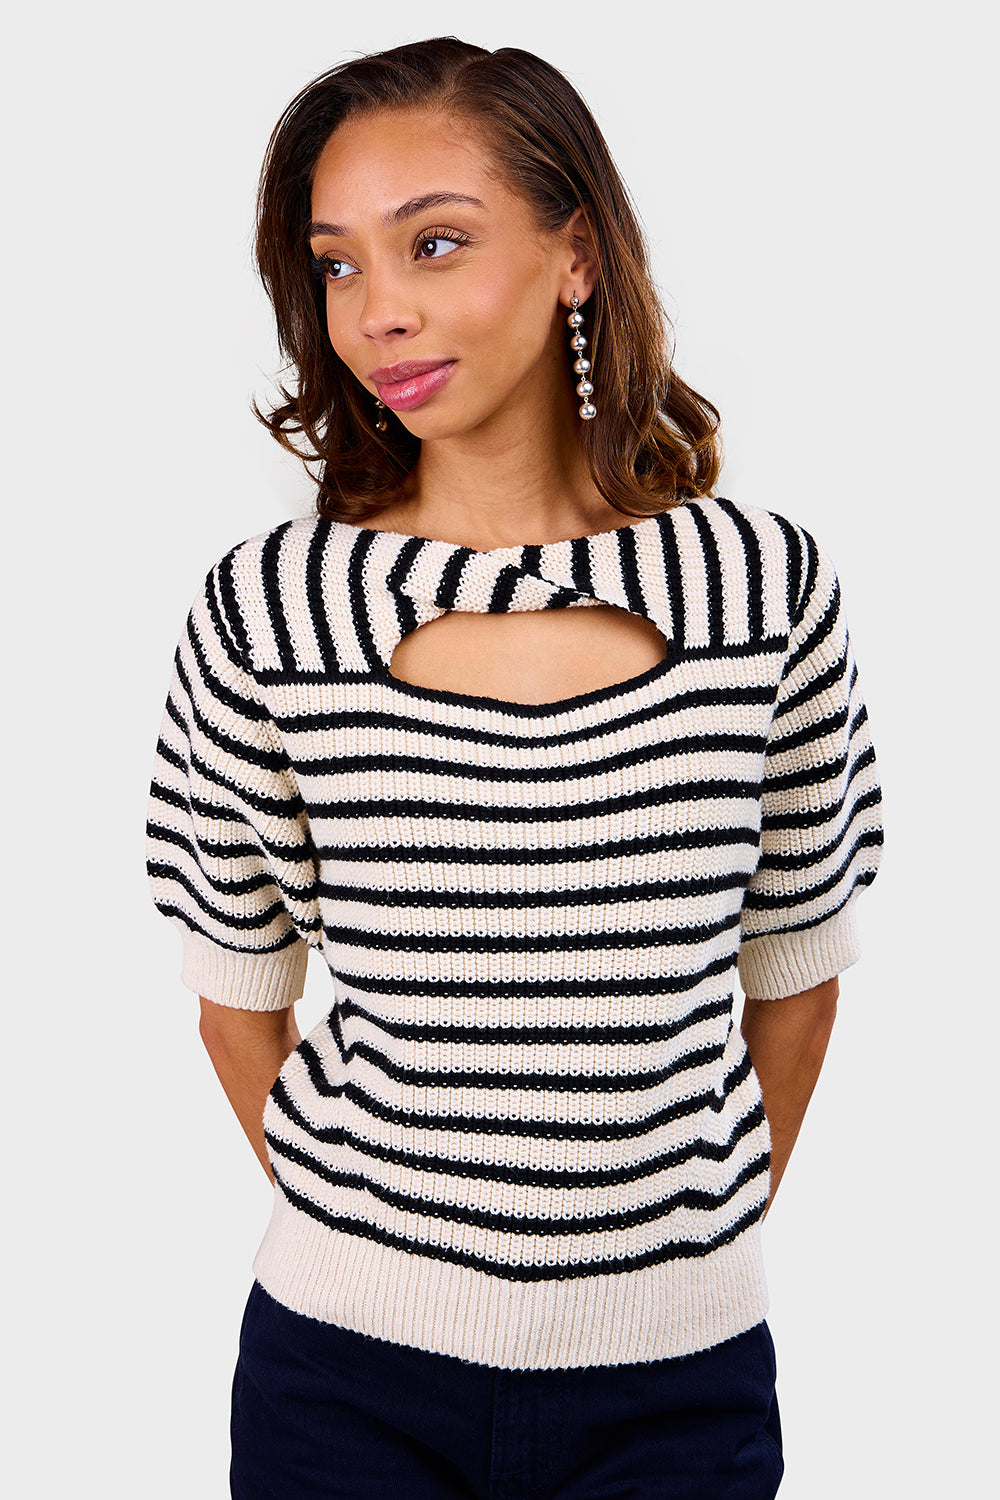 Iris Sweater - Ivory & Black Stripe